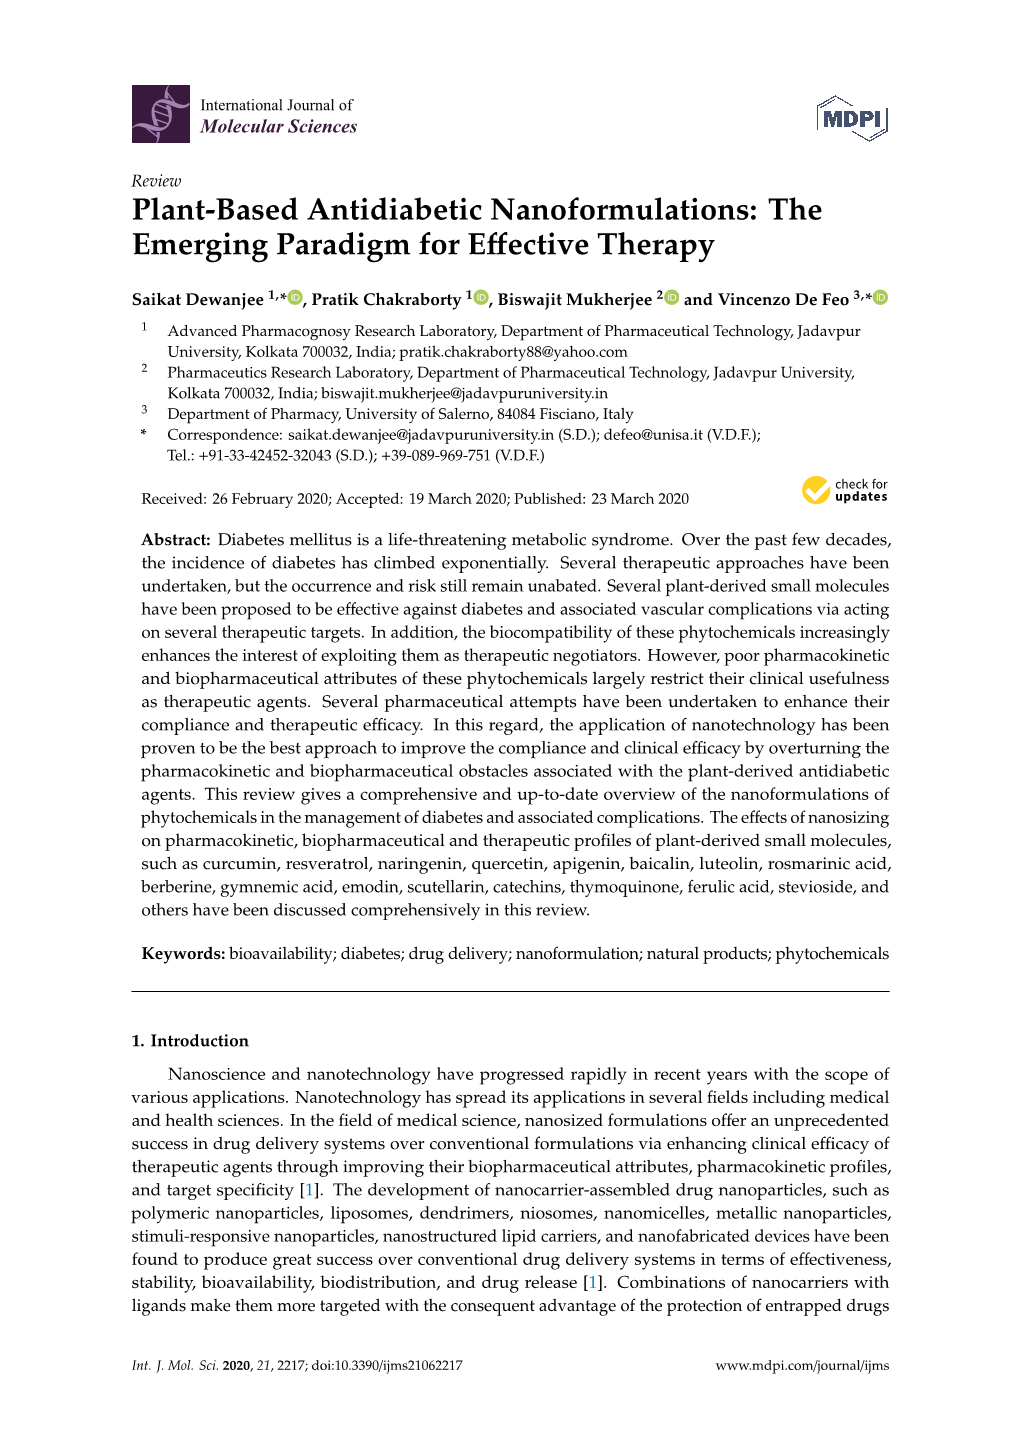 Plant-Based Antidiabetic Nanoformulations: the Emerging Paradigm for Eﬀective Therapy